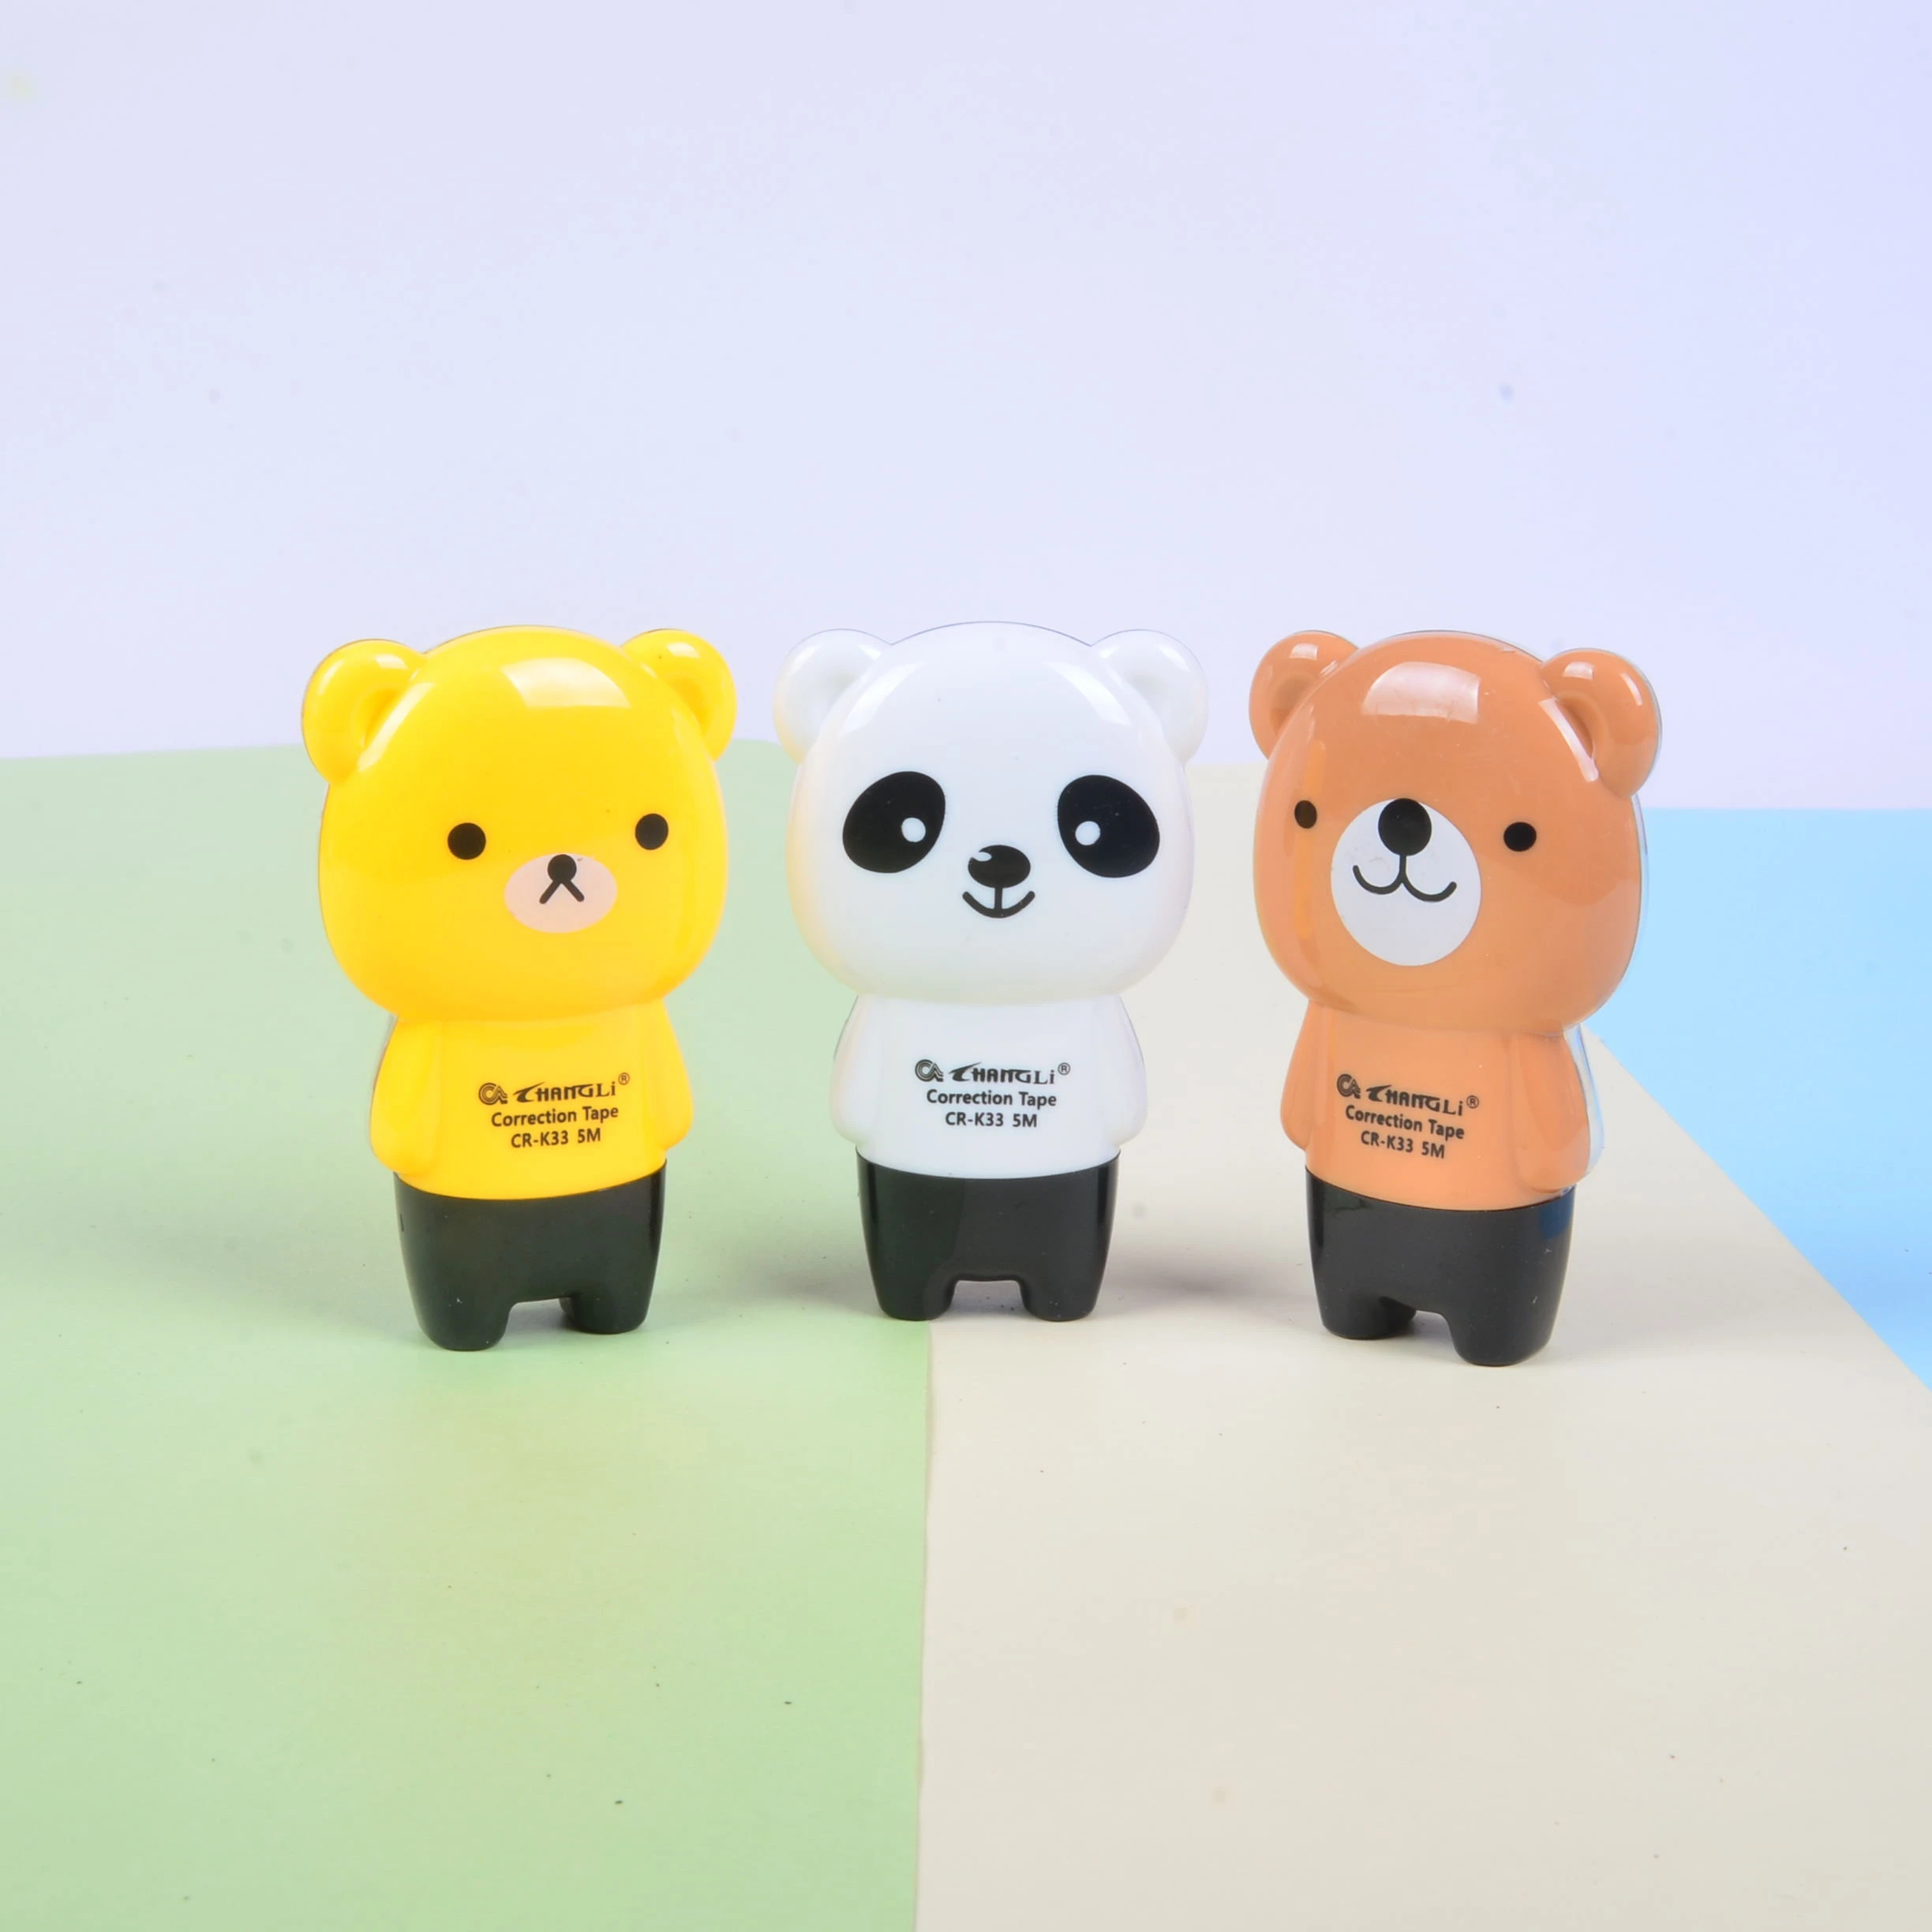 
Cartoon Shape Cute Correction Tape Bear Student Stationery Brand New Correction Supplies Items 